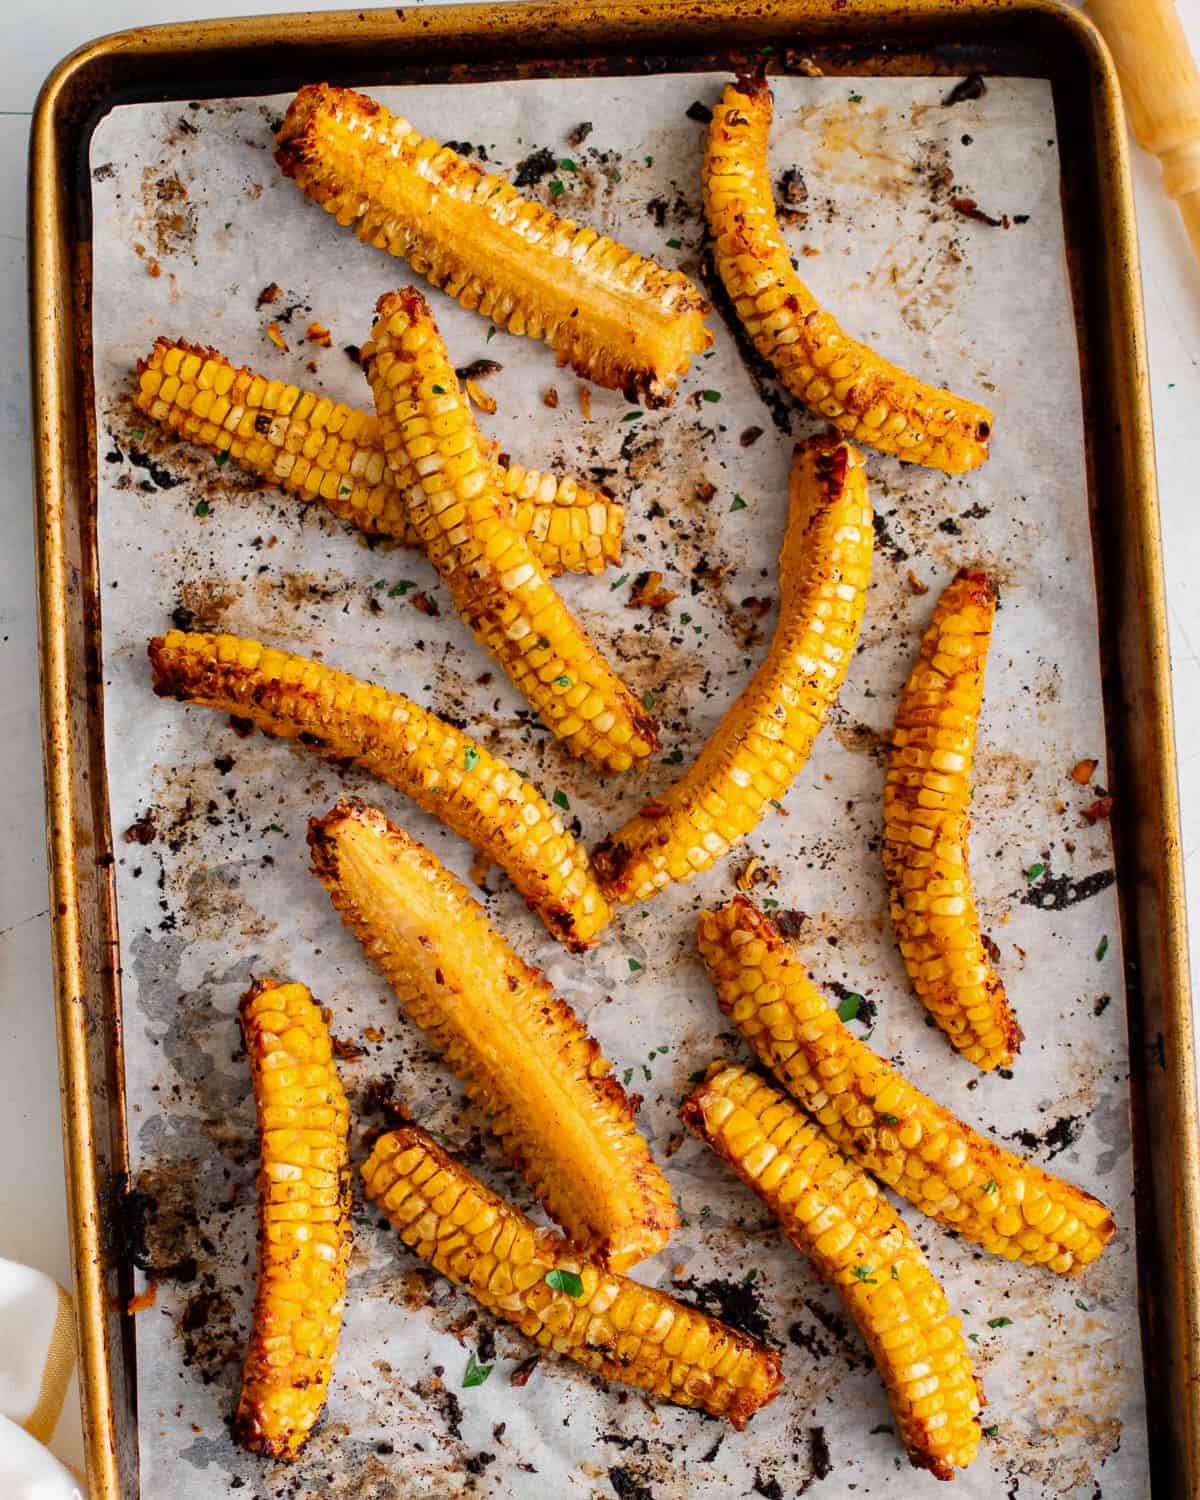 Corn on the cob arranged like ribs on a baking sheet.